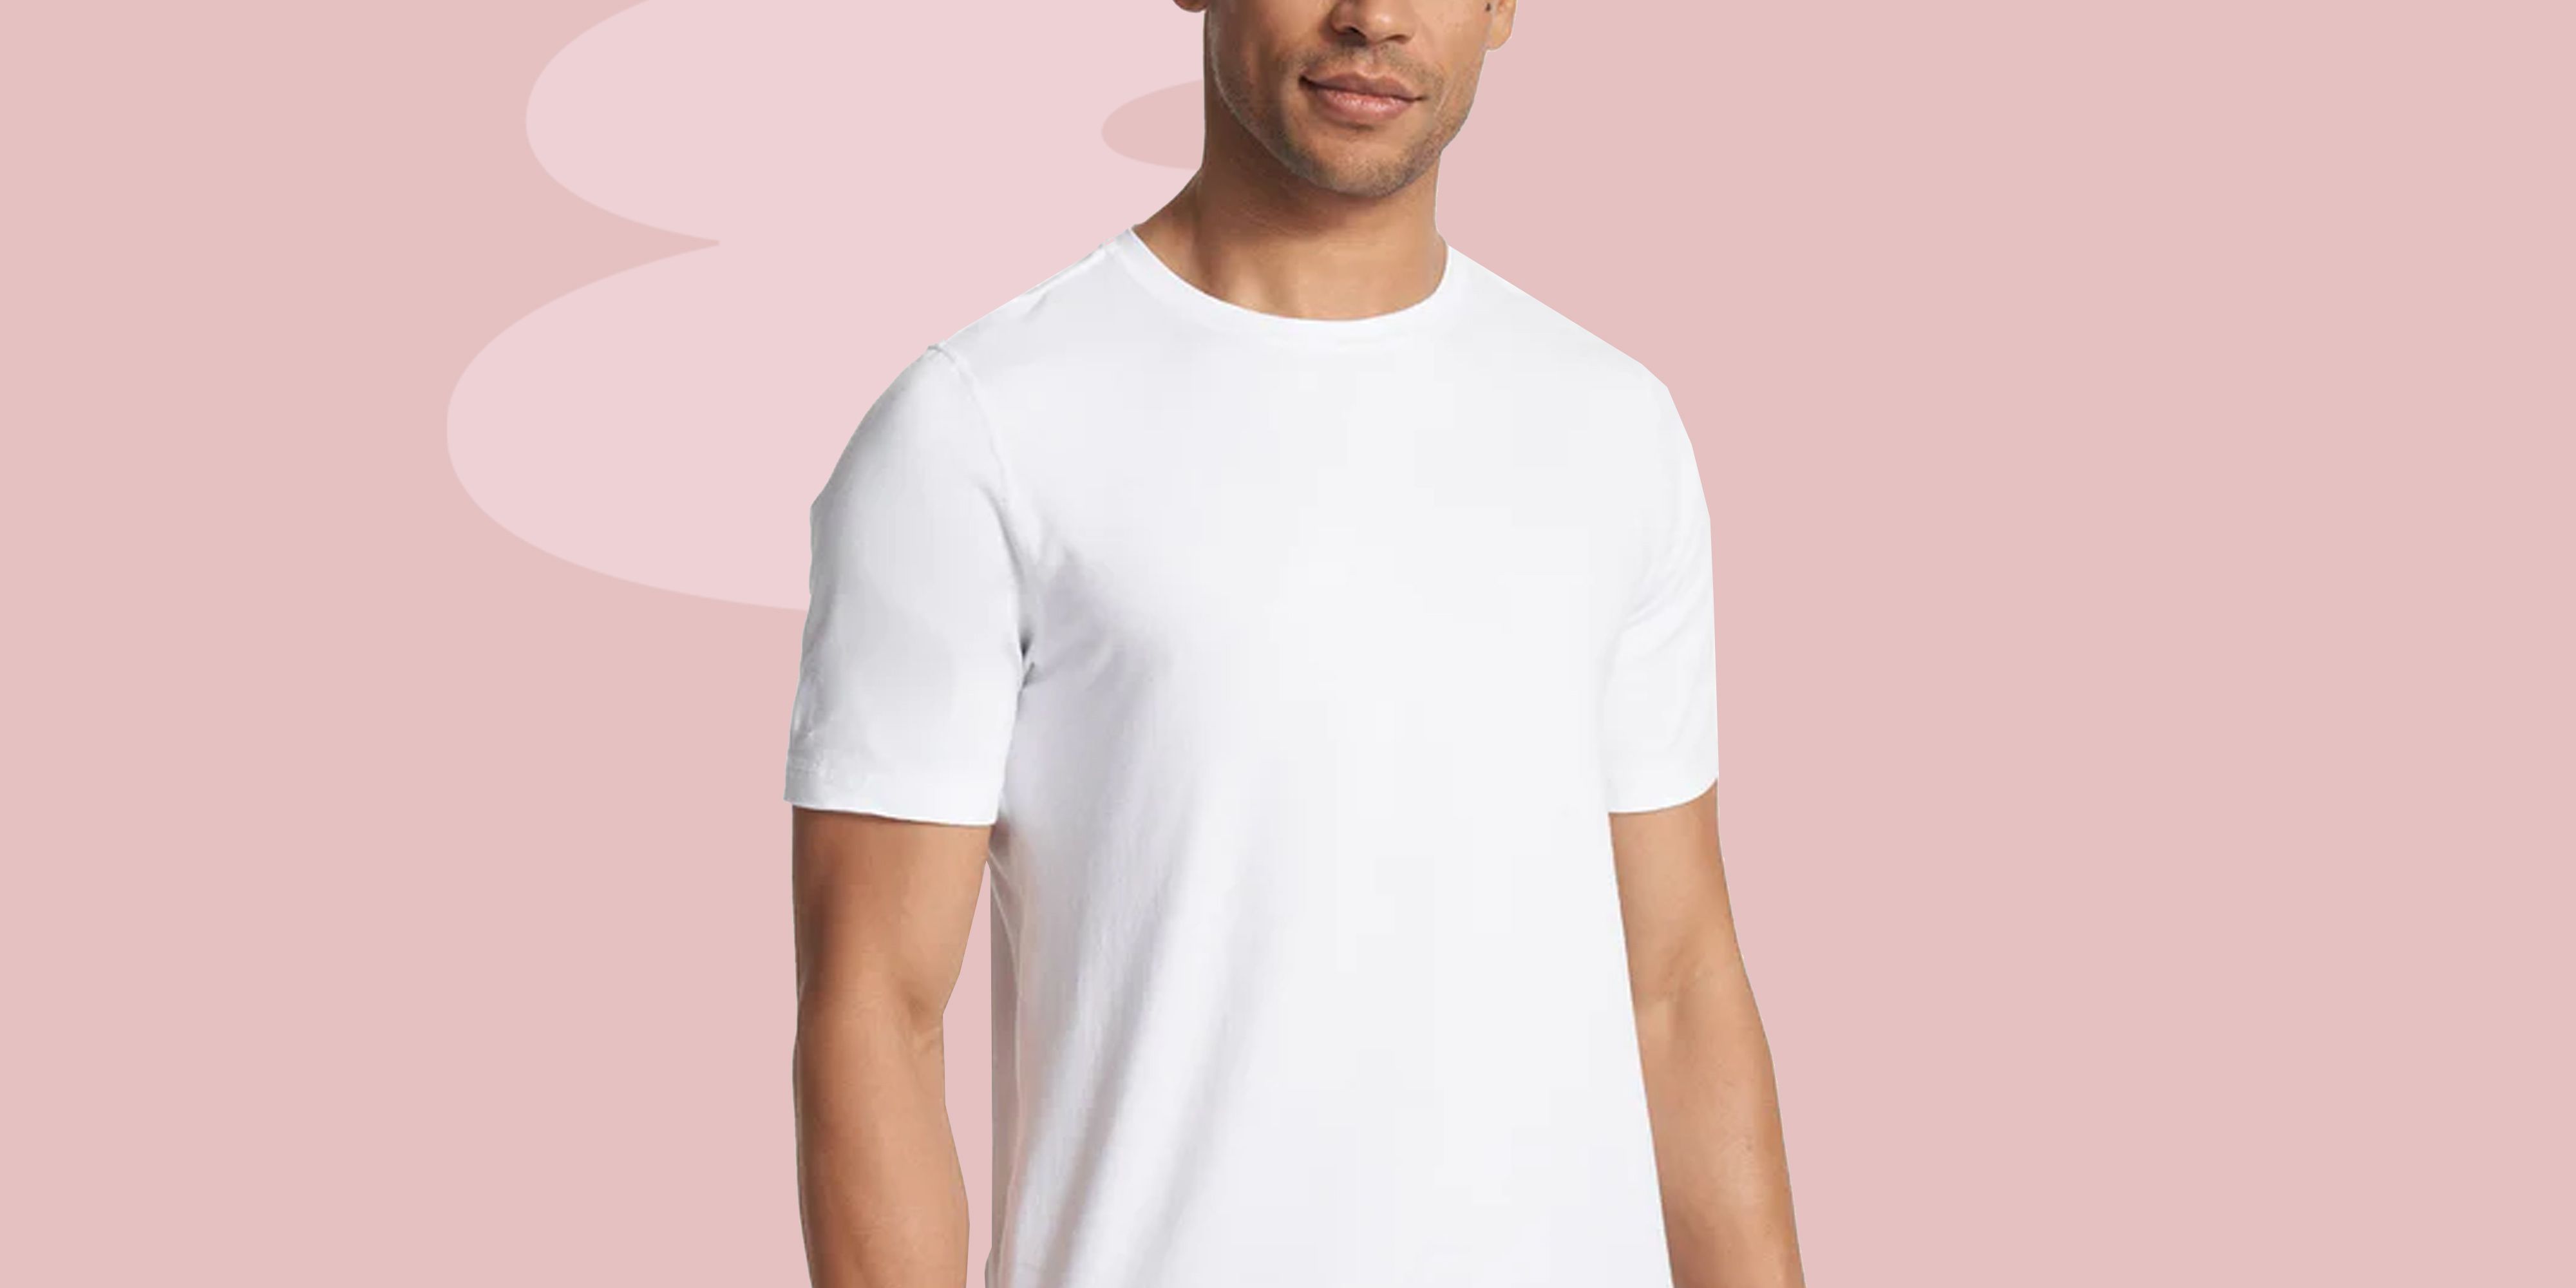 Goodfellow & Co Men's Sz XL 4 Pack White Classic Tank Top T-Shirt, 100%  Cotton